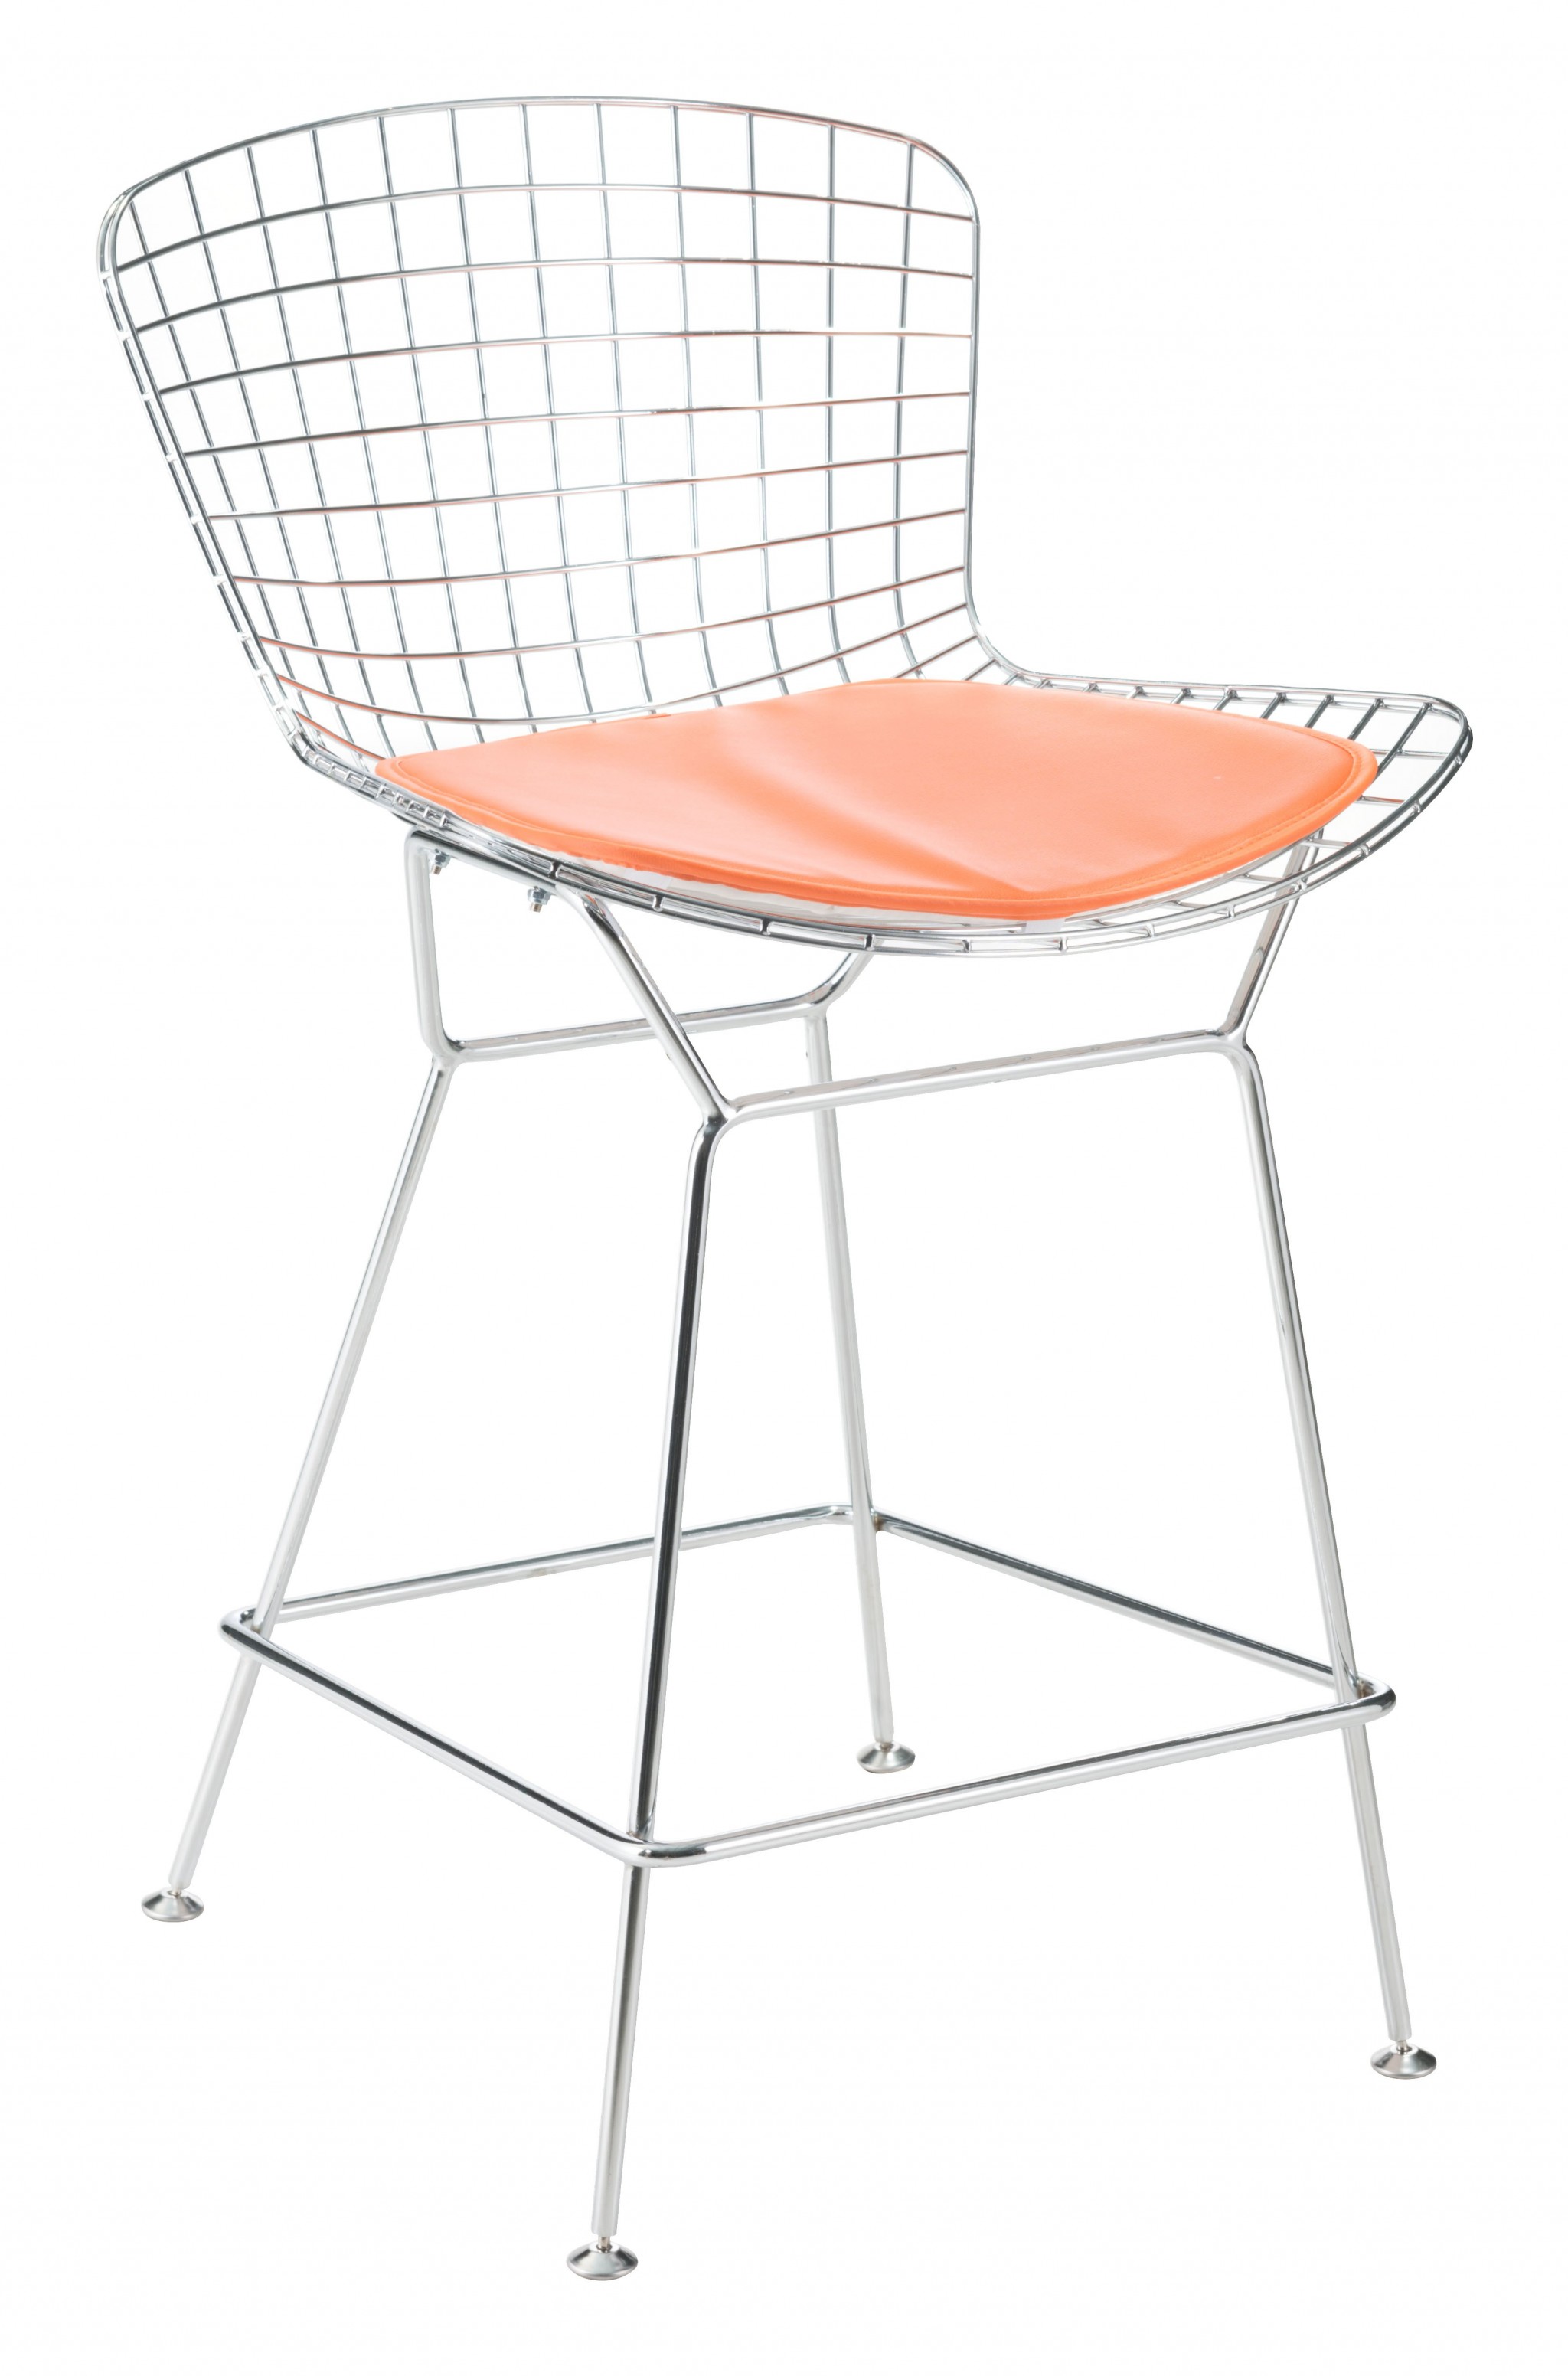 Orange Faux Leather Cushion Chair Pad